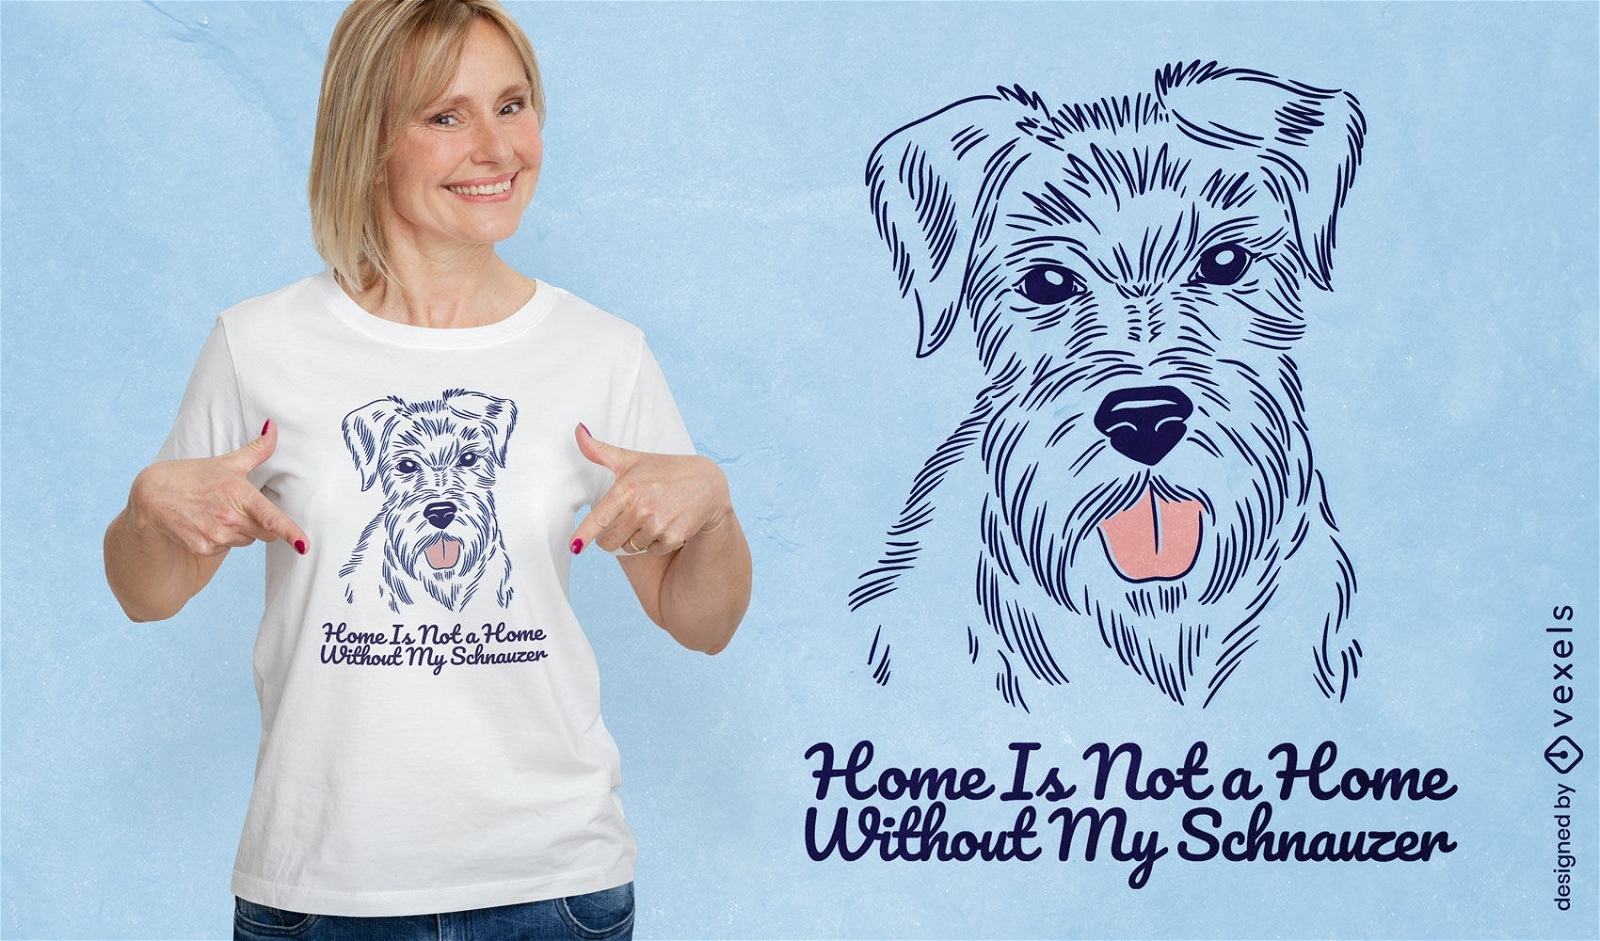 Schnauzer cute dog animal t-shirt design